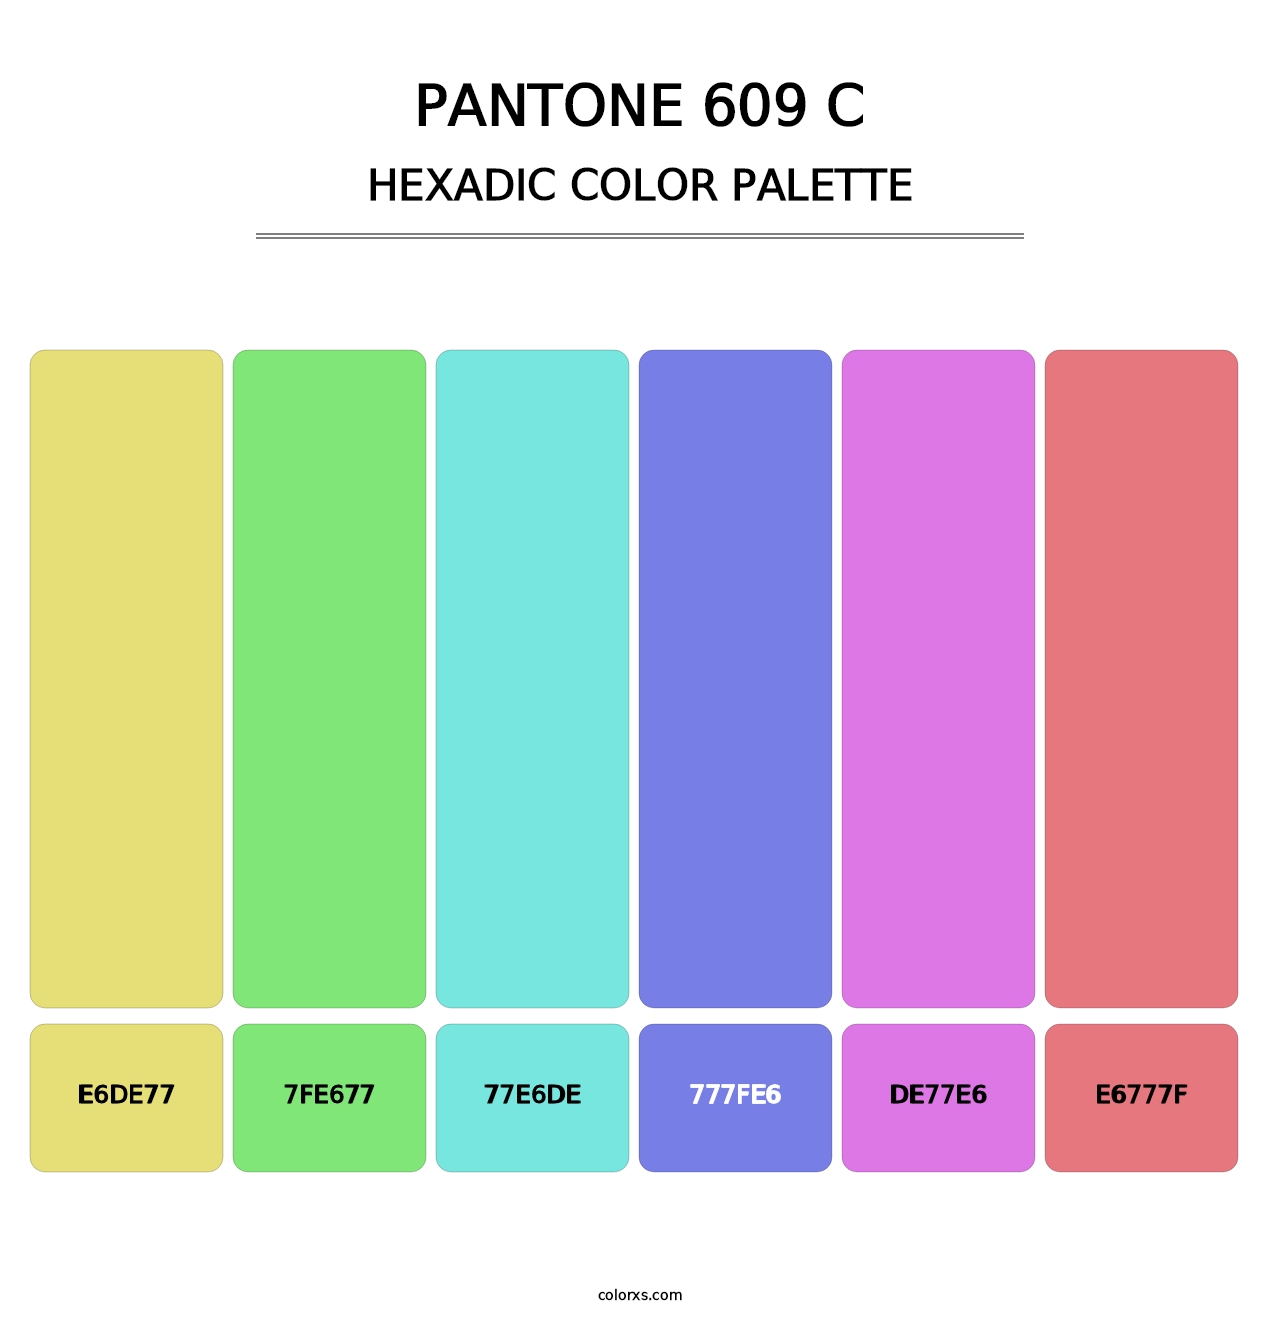 PANTONE 609 C - Hexadic Color Palette